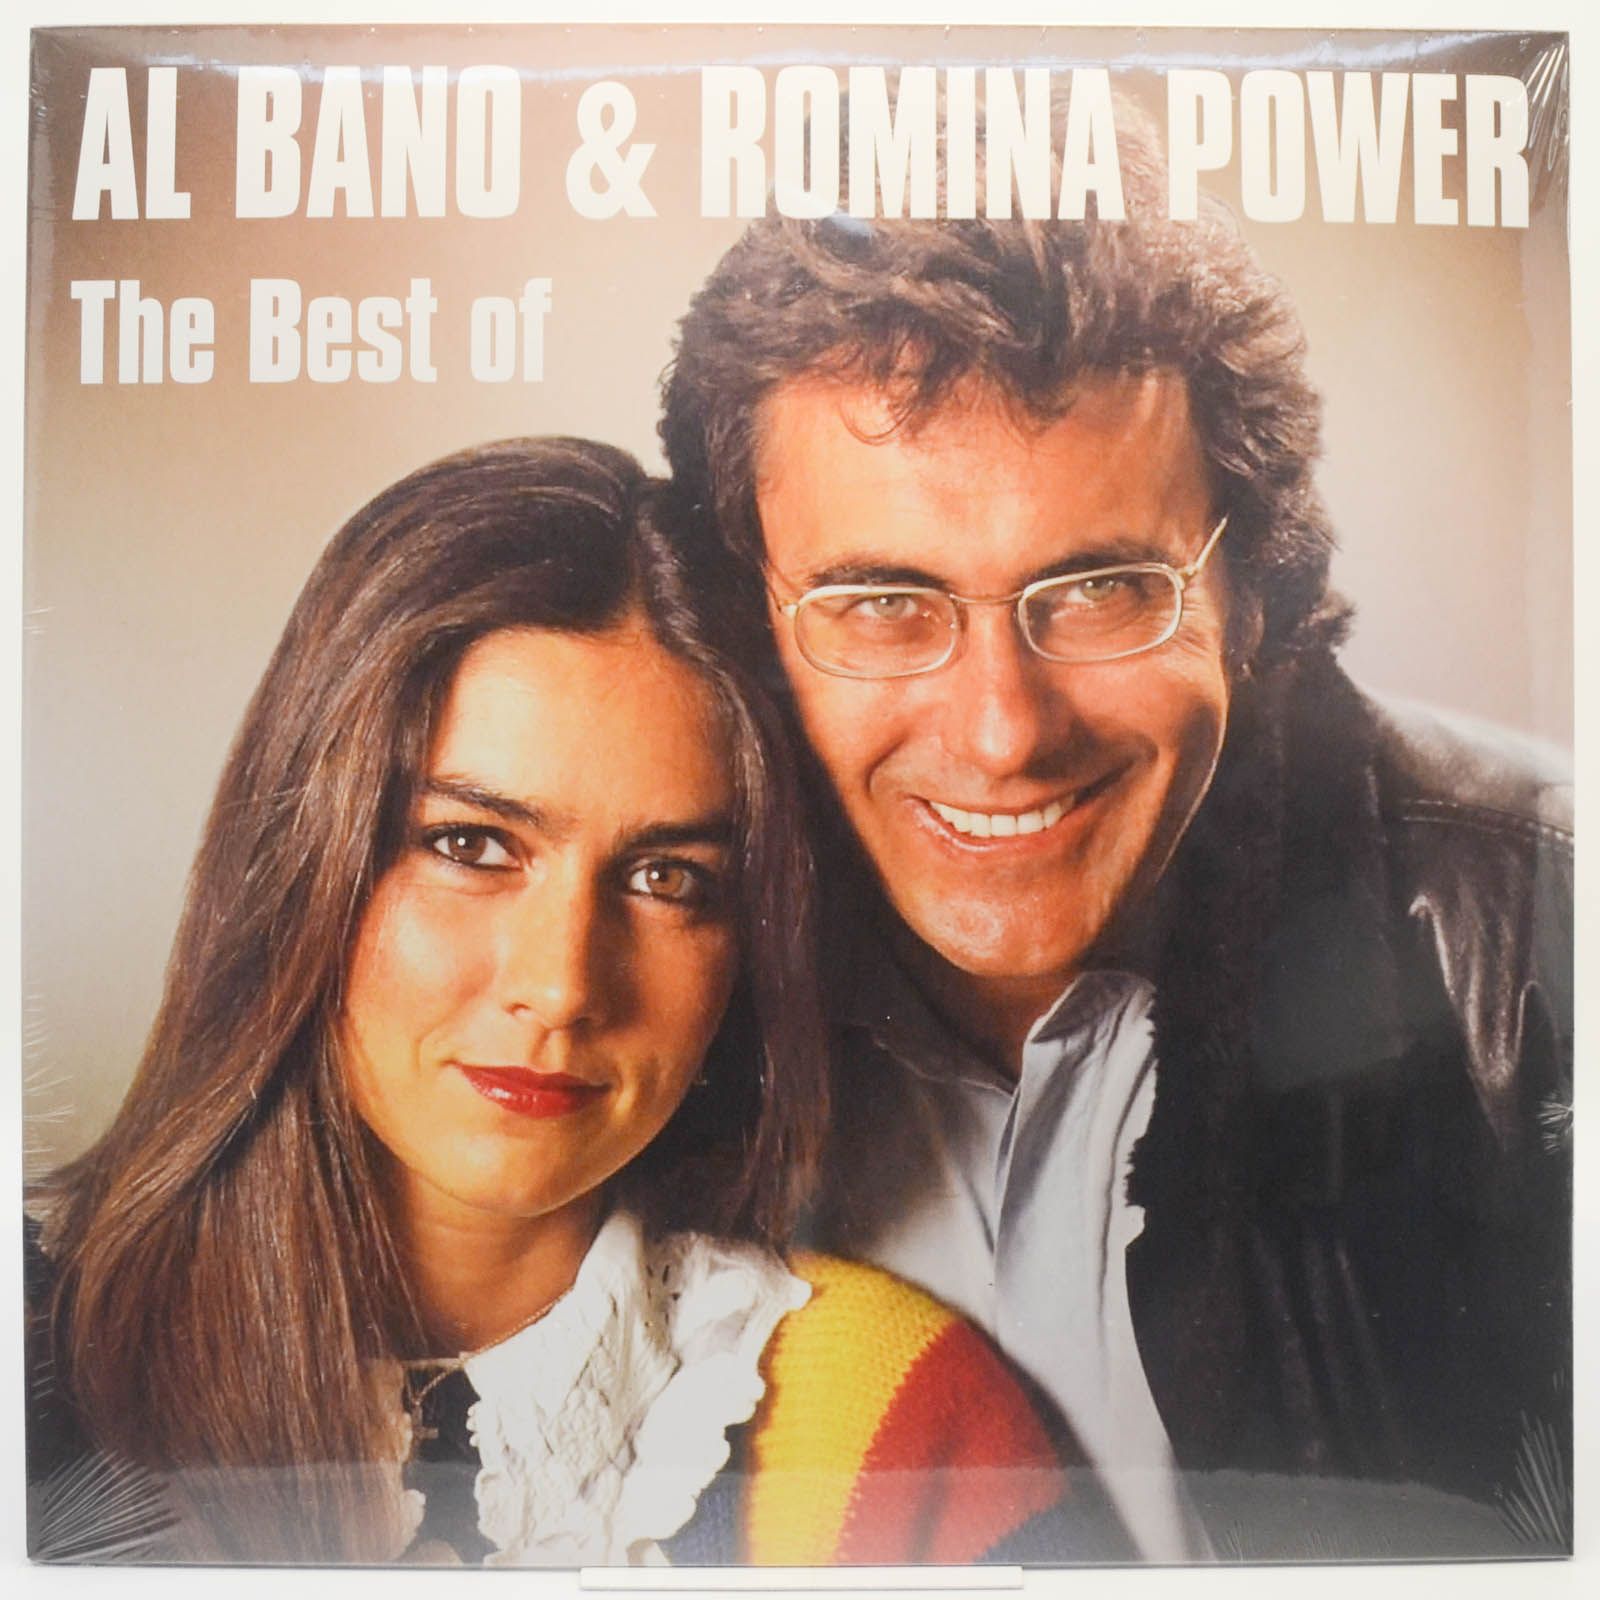 Al Bano & Romina Power — The Best Of, 2019